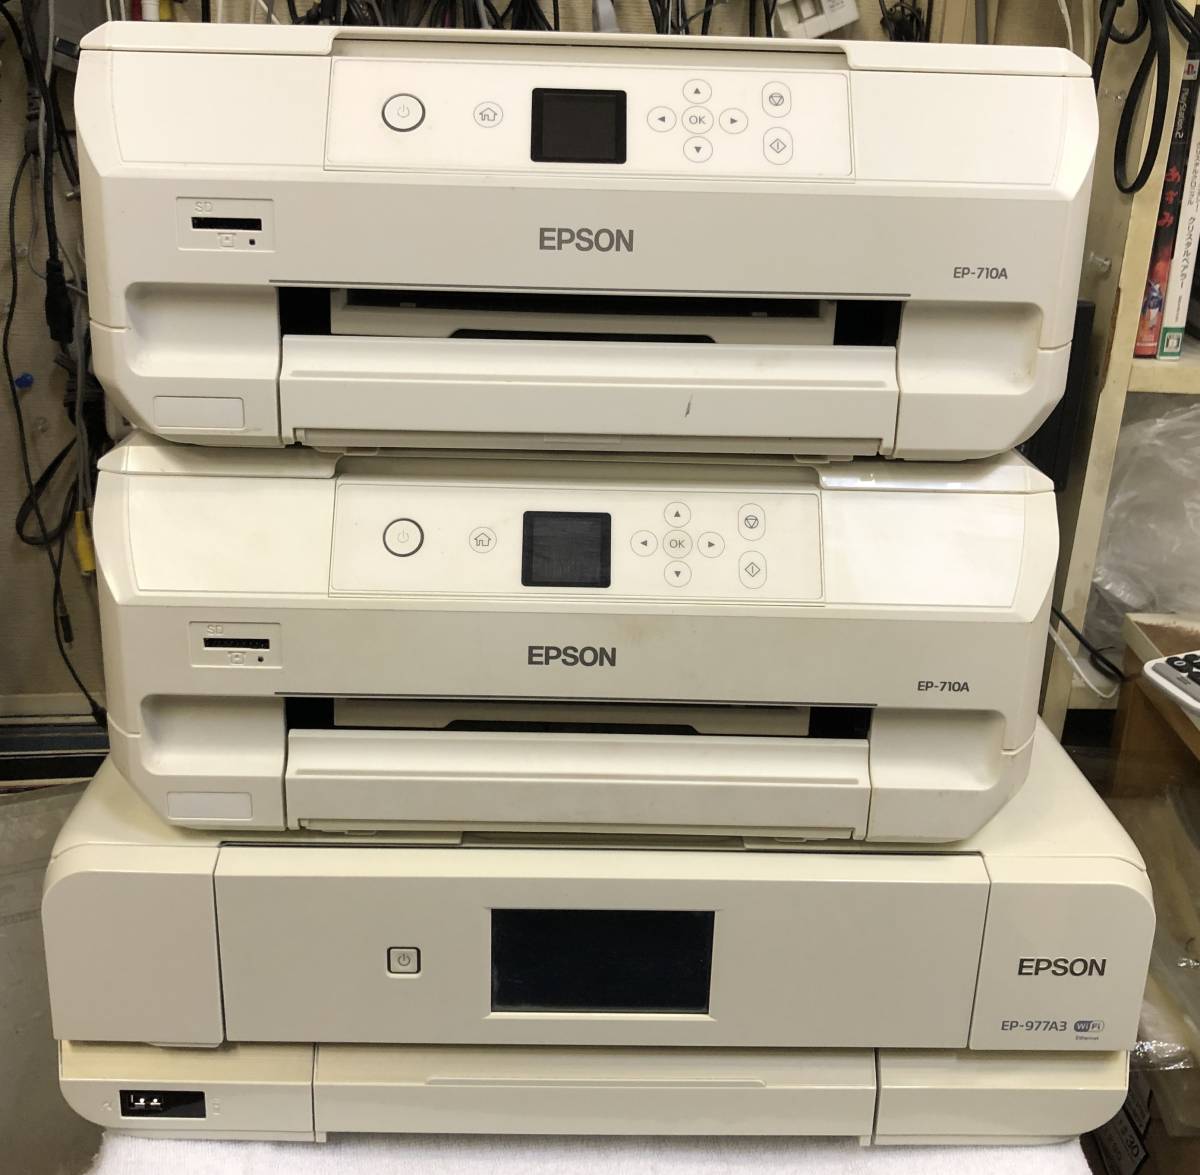 EPSON エプソン インクジェットプリンター EP-710A×2 EP-977A3 3台